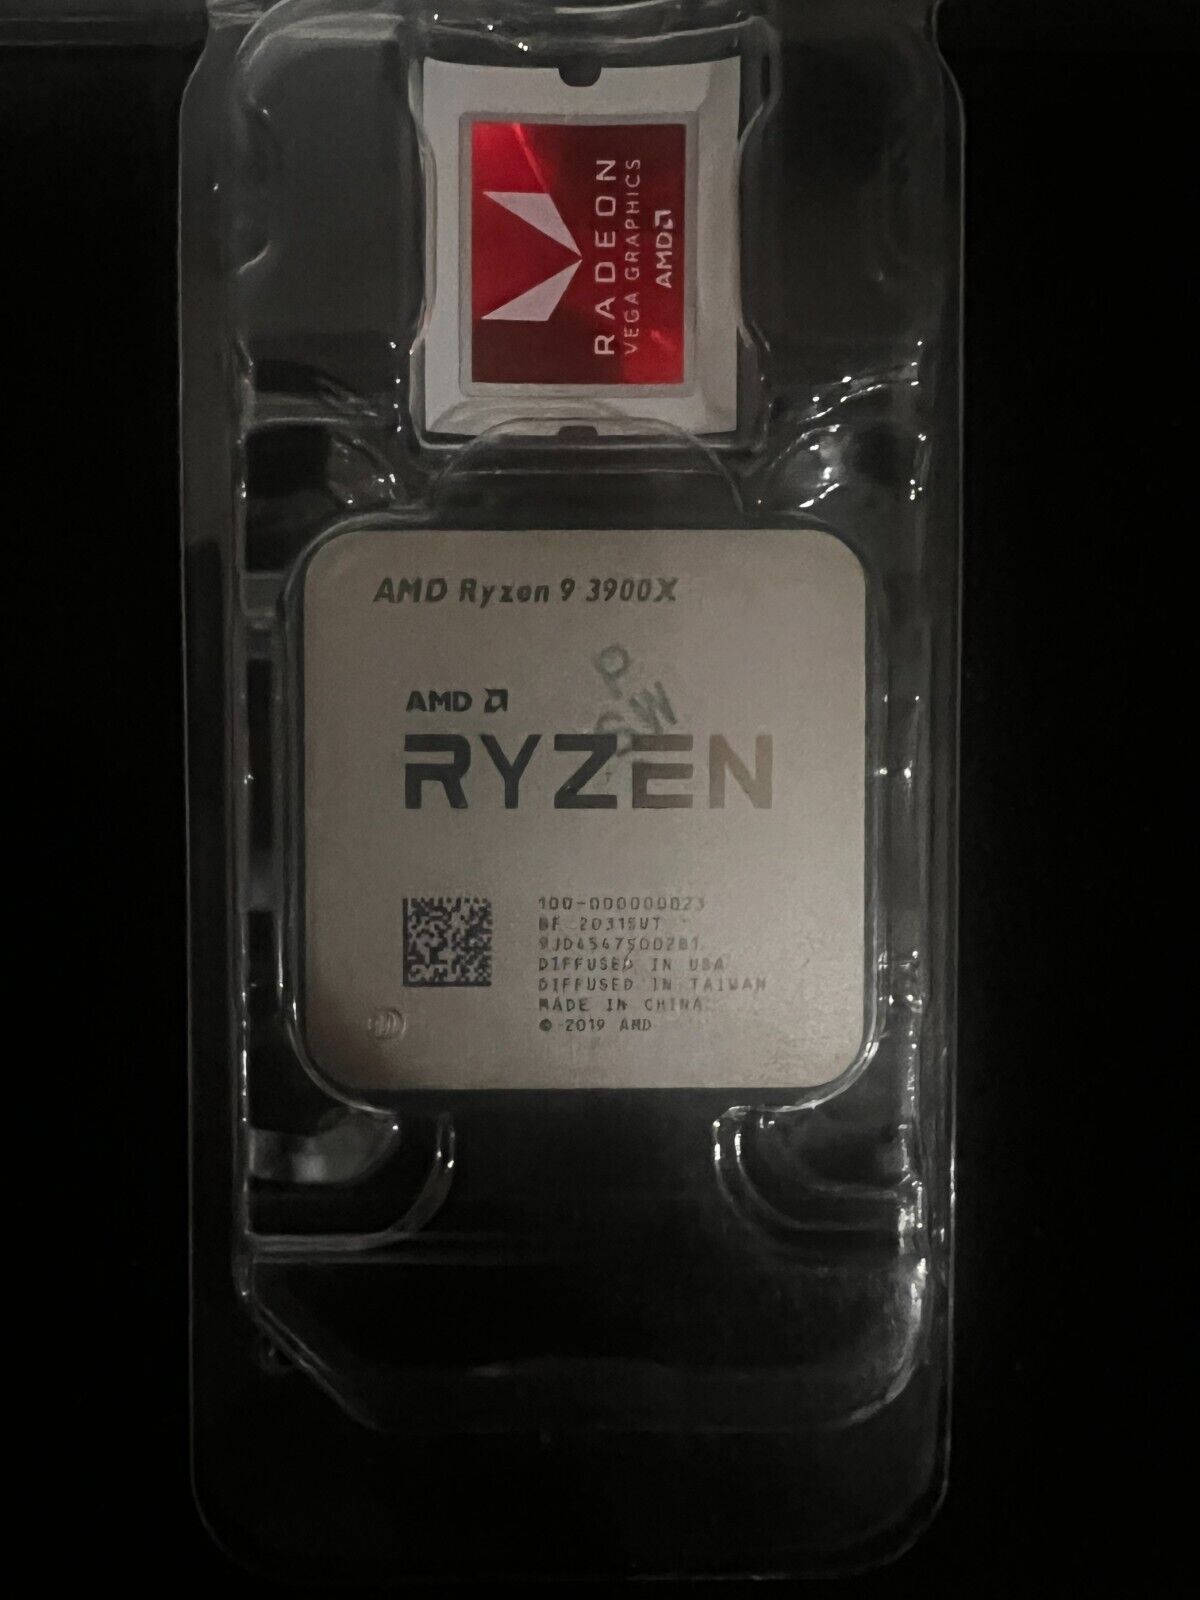 Ryzen 9 3900X *BRAND NEW* (OPEN BOX) - 12 Cores 24 Threads AMD